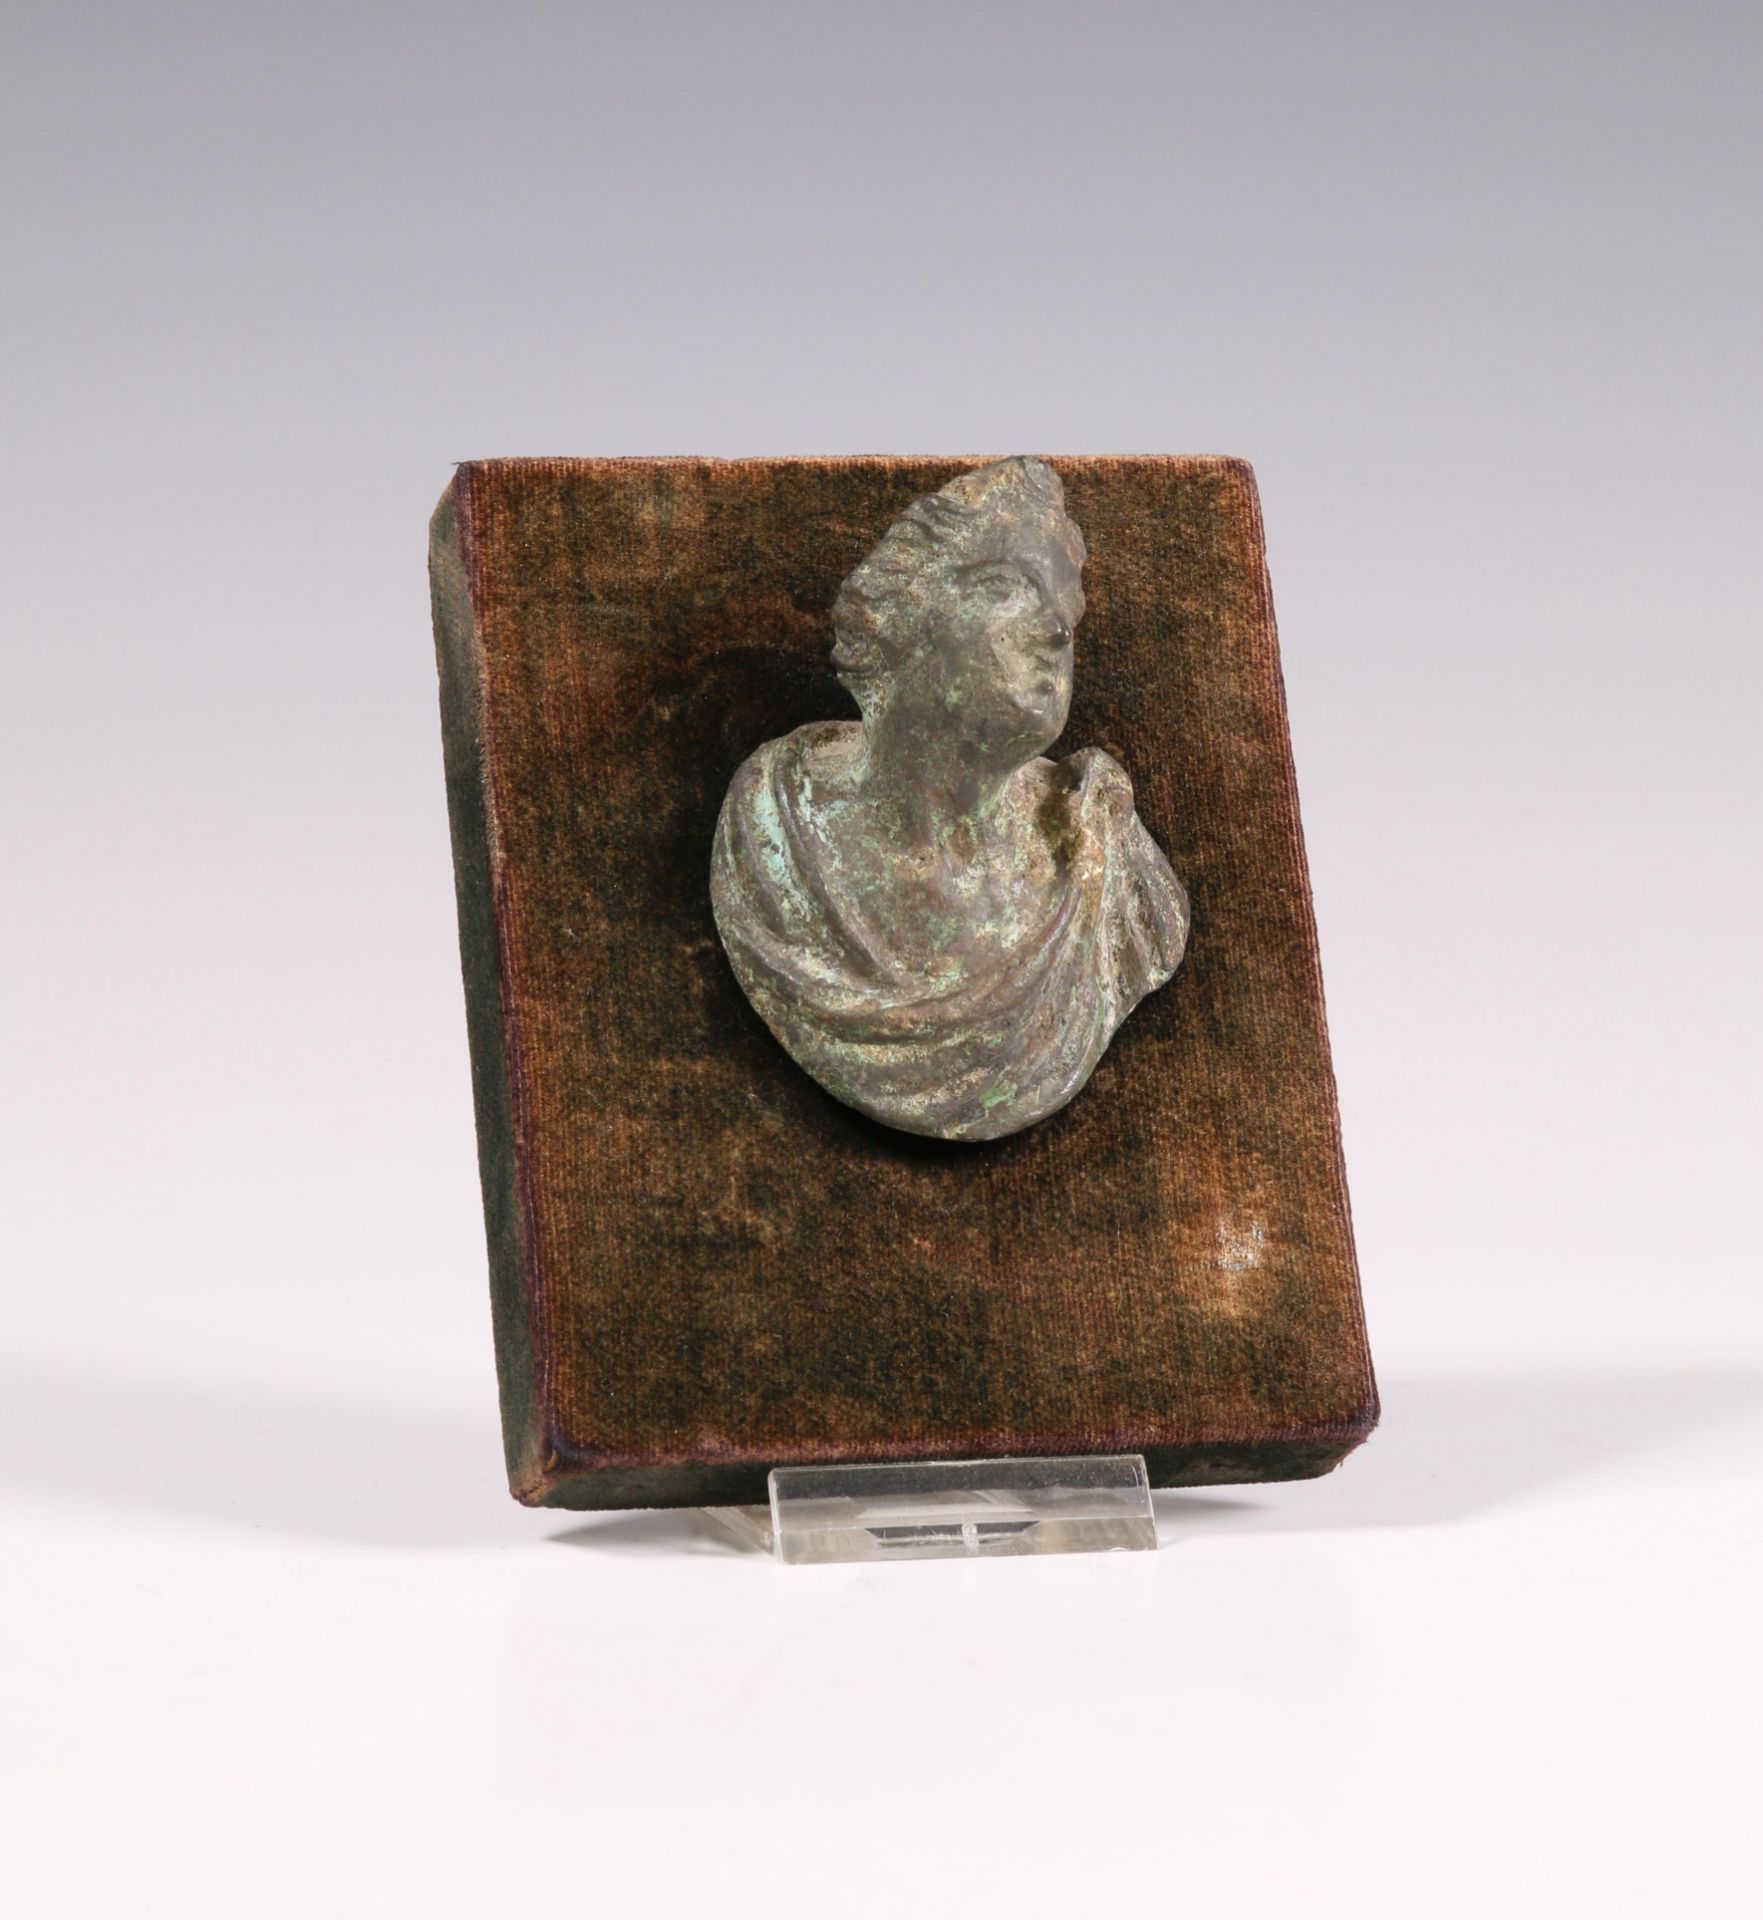 Roman bronze ornament, ca. 2nd century - Image 2 of 4